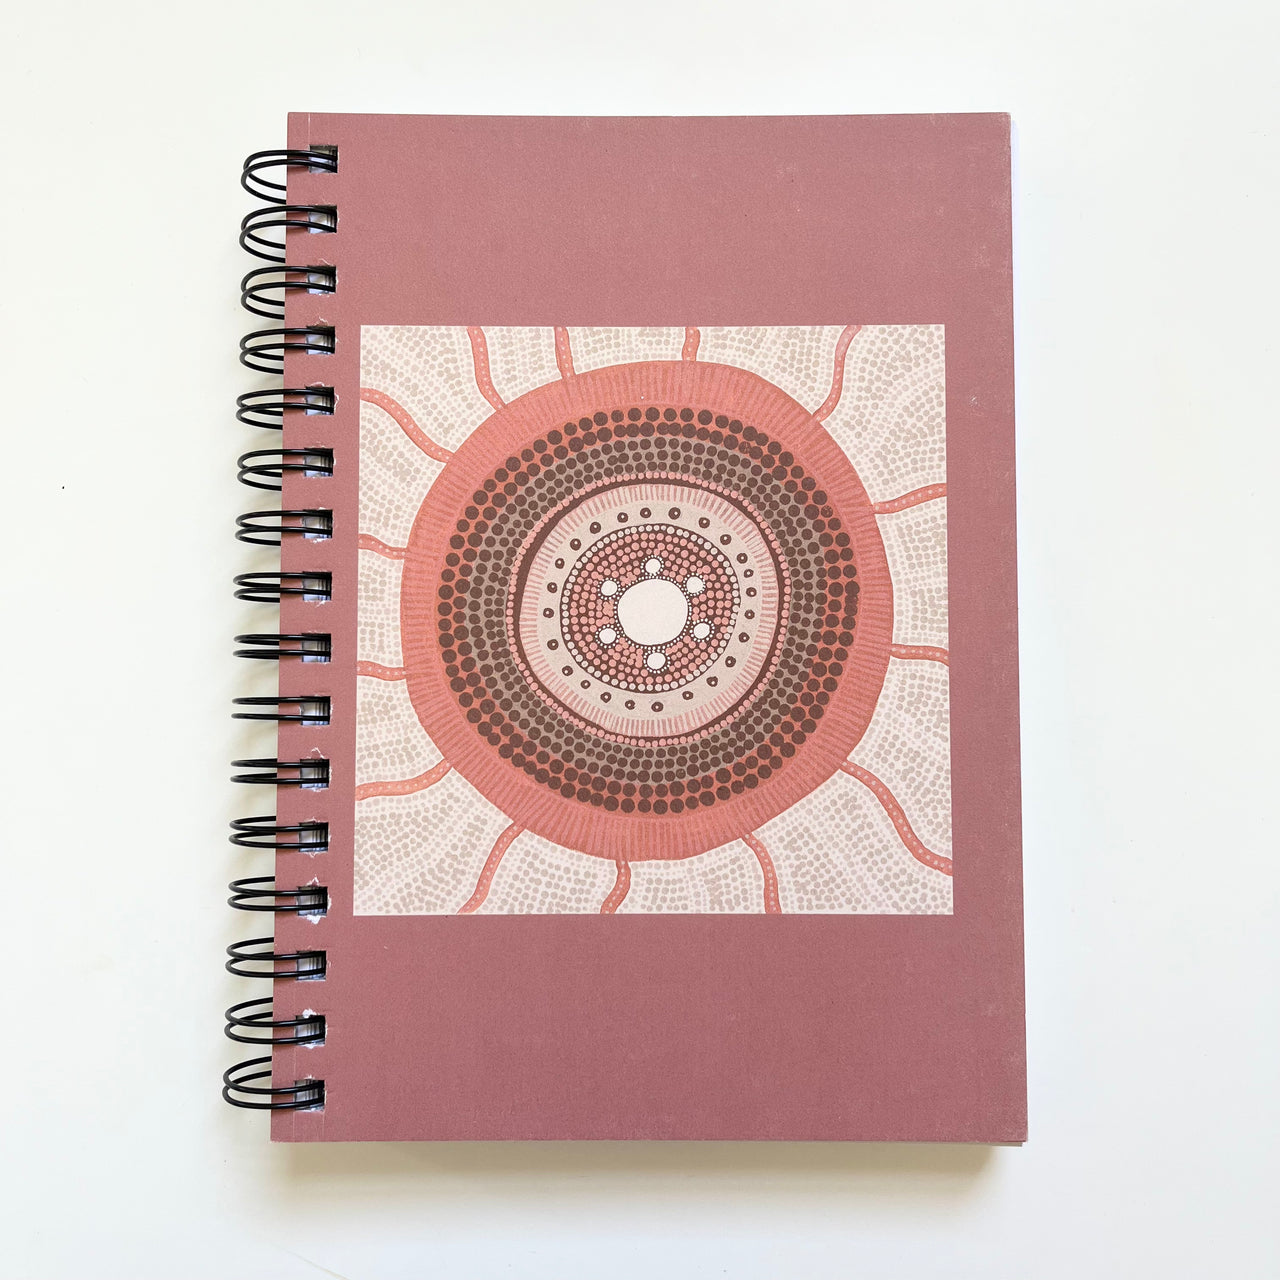 Notebook - Star Guide by Emma Stenhouse. Australian Art Prints and Homewares. Green Door Decor. www.greendoordecor.com.au